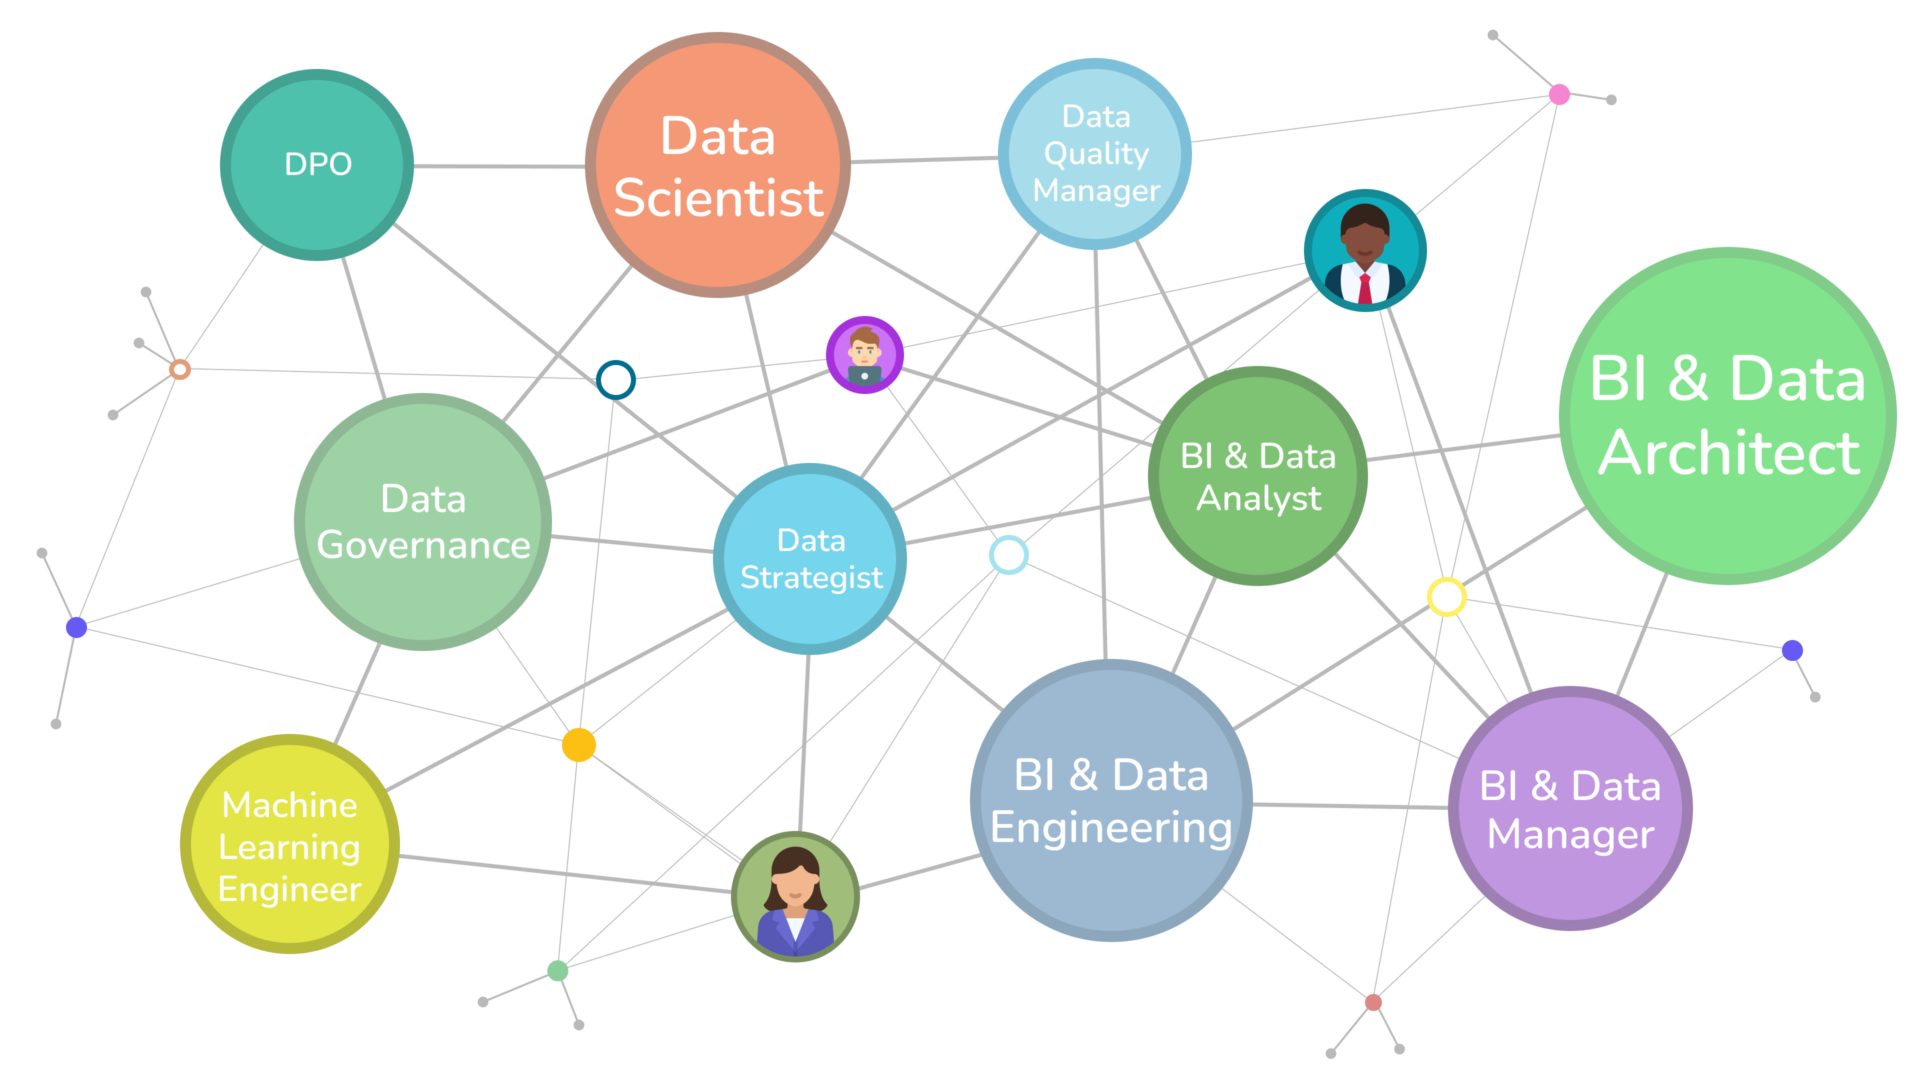 Machine Learning Engineer, Data Governance, DPO, Data Strategist, Data Scientist, BI & Data Engineering, BI & Data Analyst, Data Quality Manager, BI & Data Manager, BI & Data Architect